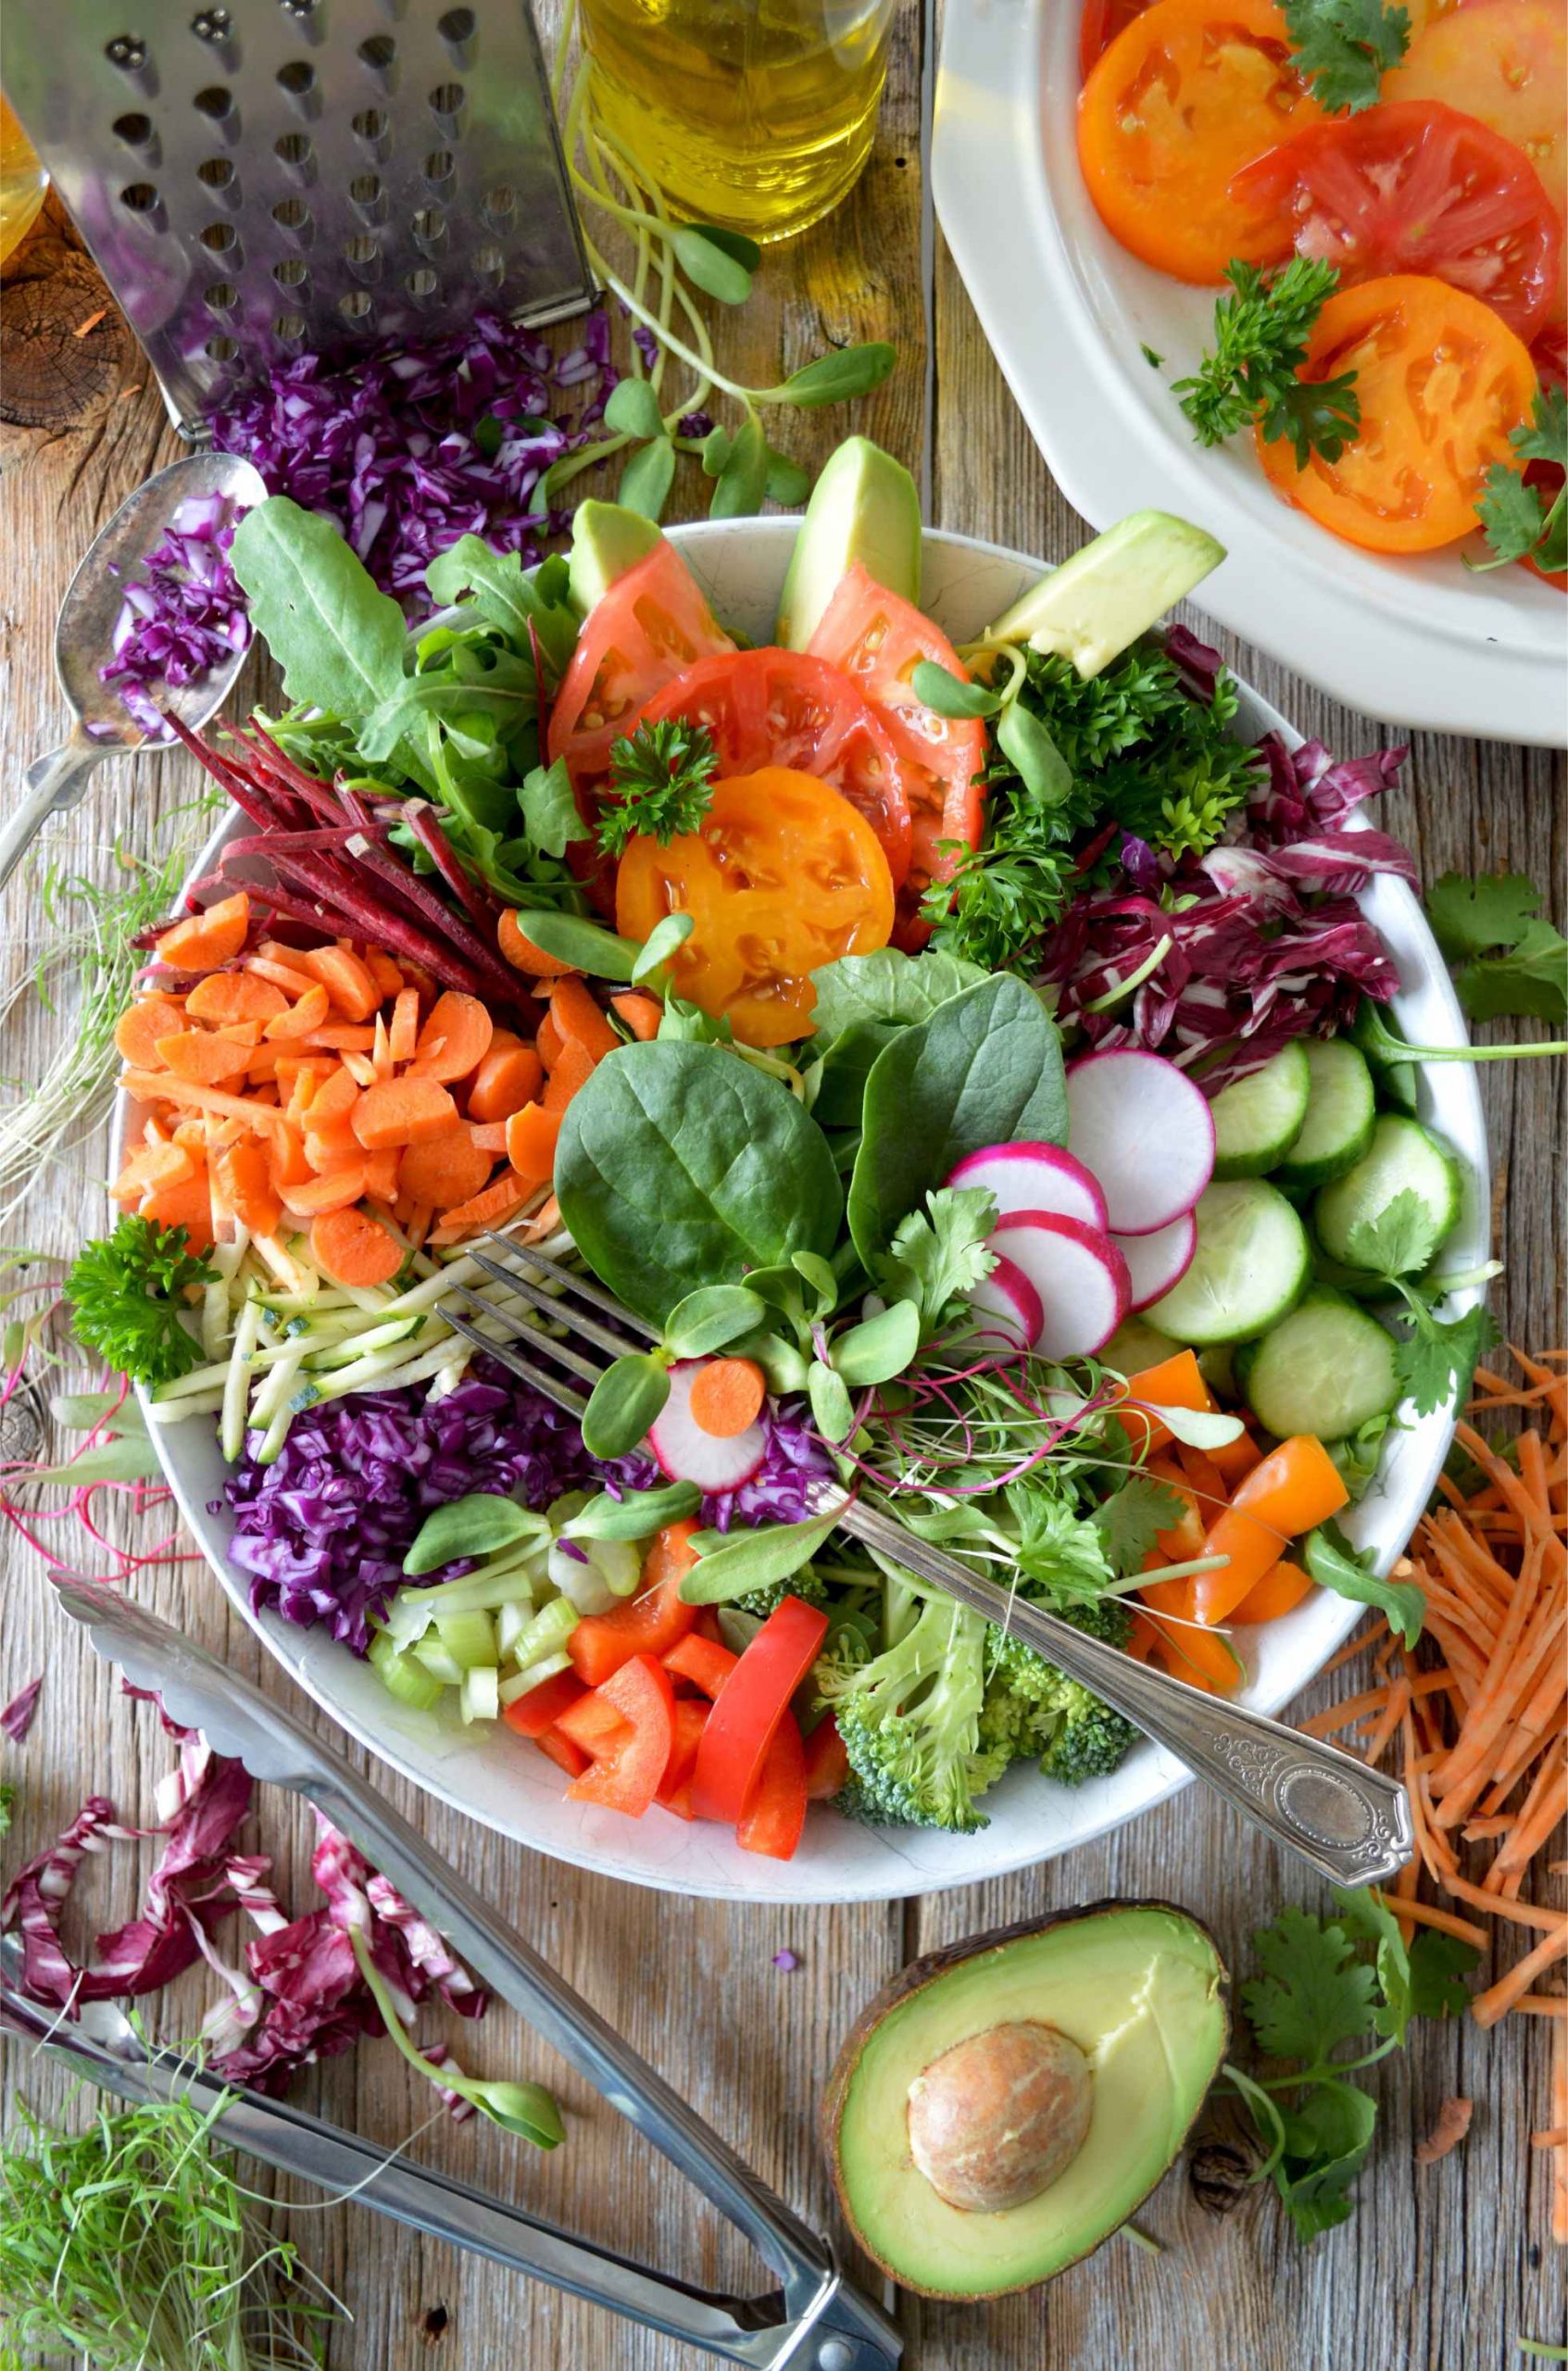 Bilde av en salat med friske grønnsaker. Photo by Nadine Primeau on Unsplash compressed